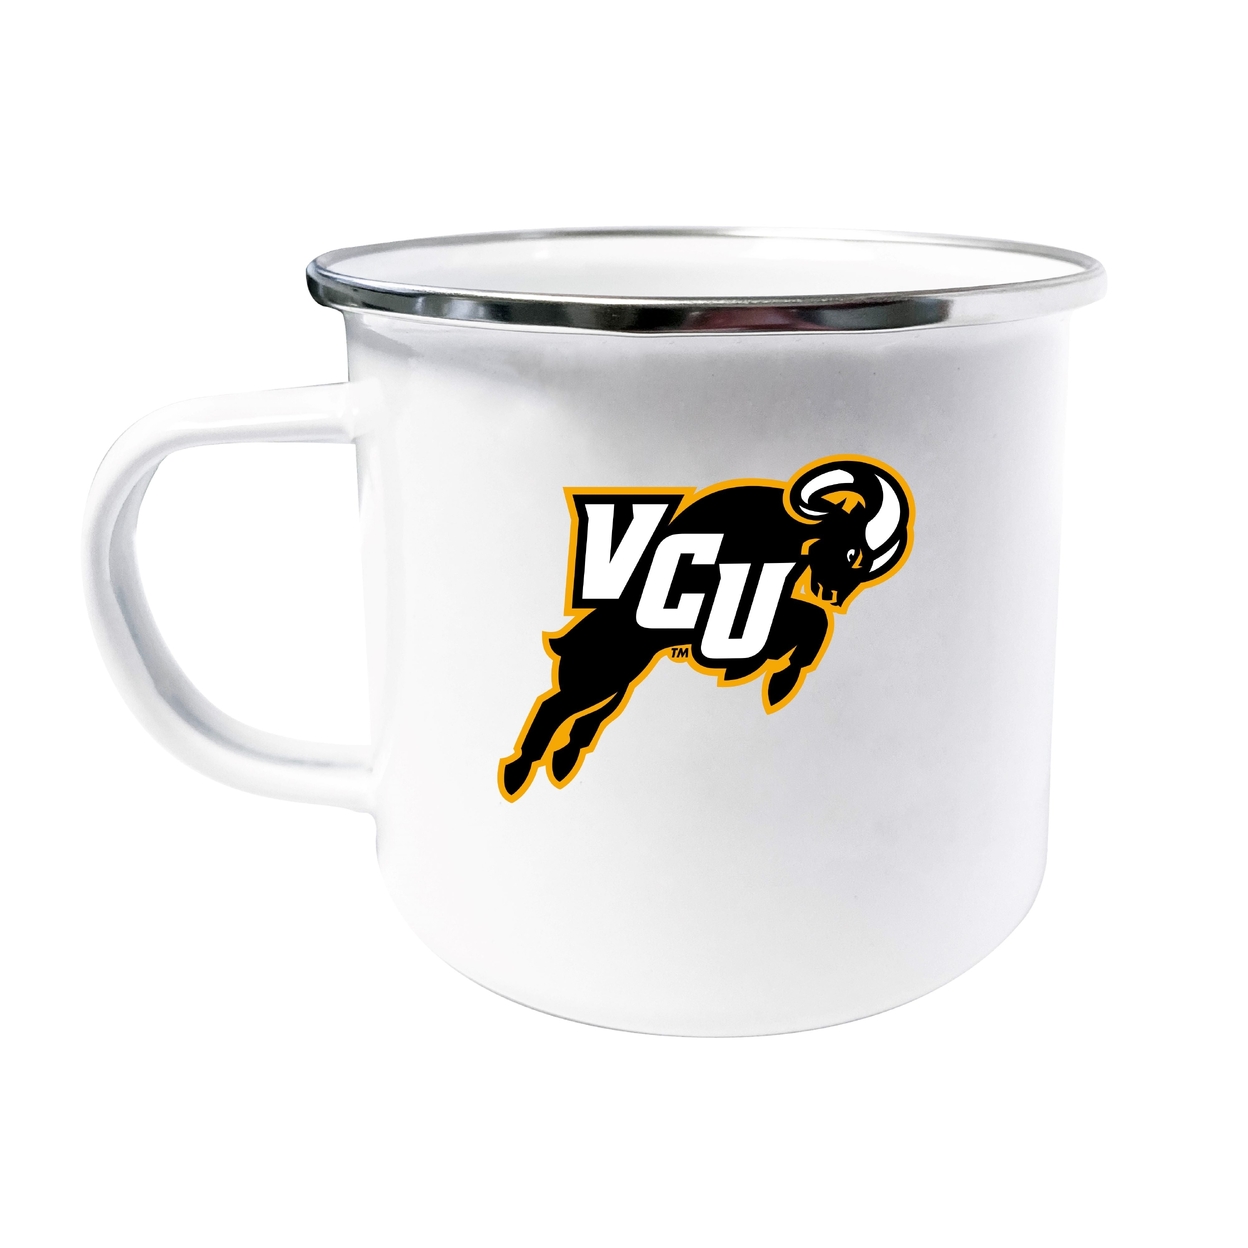 Virginia Commonwealth Tin Camper Coffee Mug - Choose Your Color - Gray